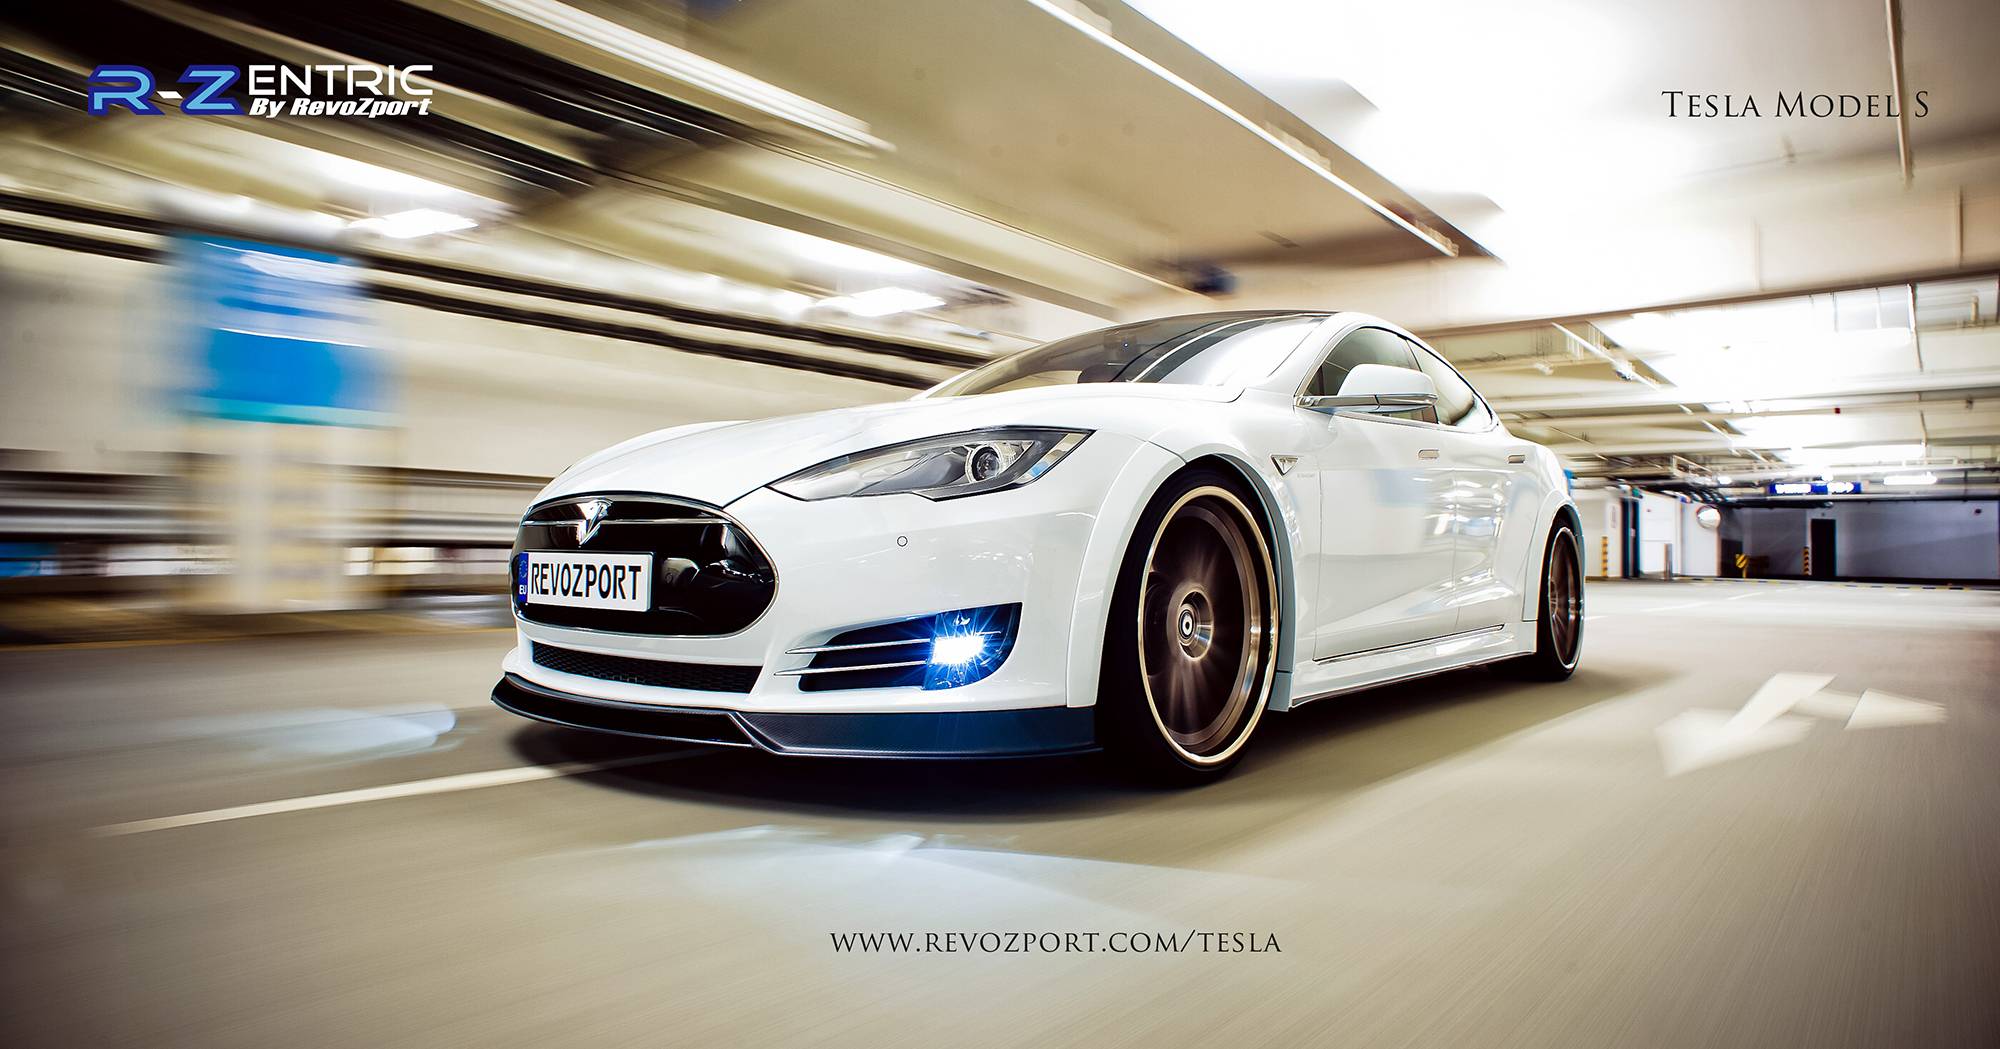 Машина безопасности RevoZport R-Zentric Tesla Model S Formula E